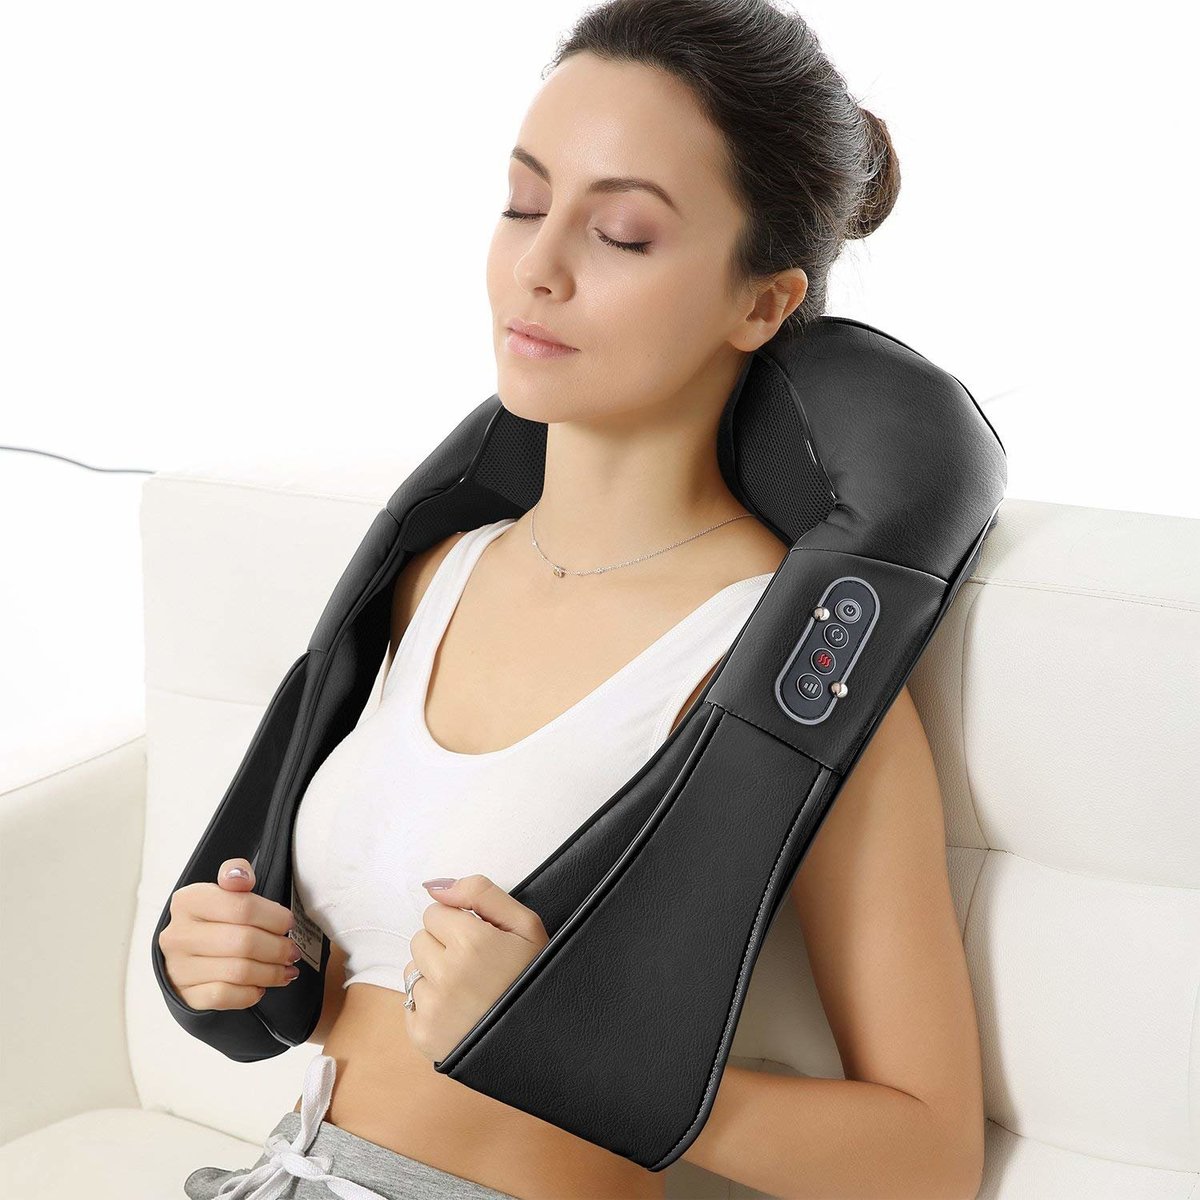 Naipo - MGS-150D Shoulder and Neck Heated Kneading Massager 【Hong Kong License】